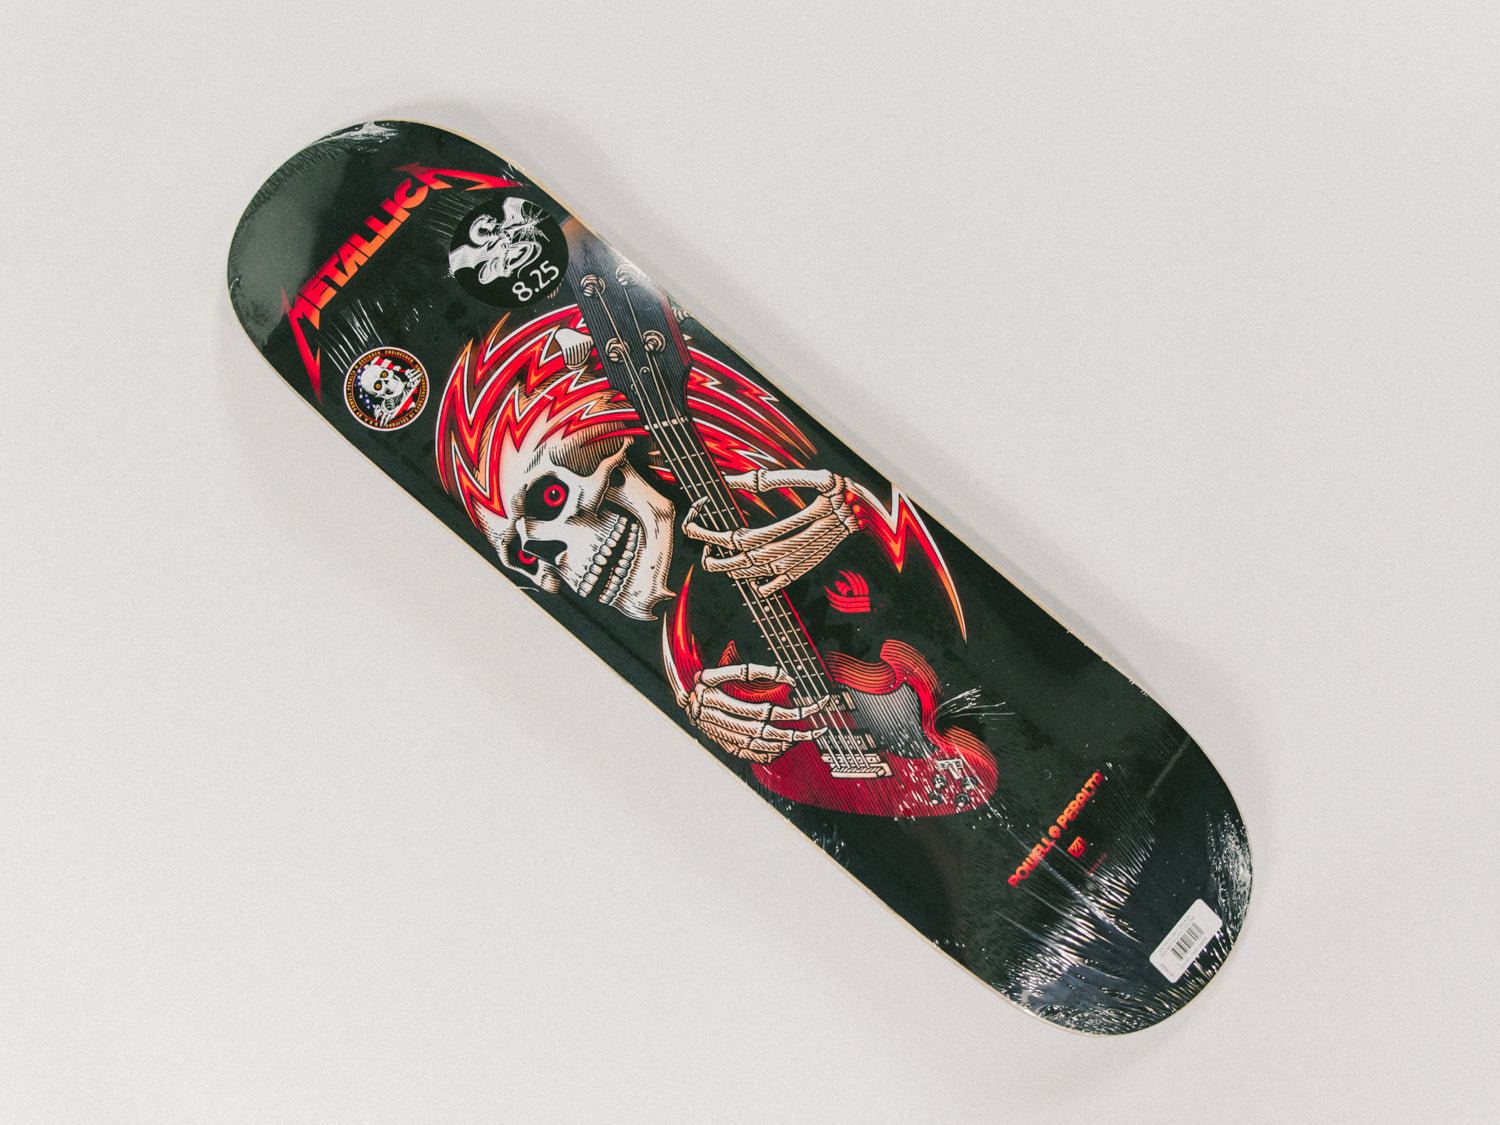 Powell Peralta Flight Skateboard 8.25" Black – Unheardof Brand